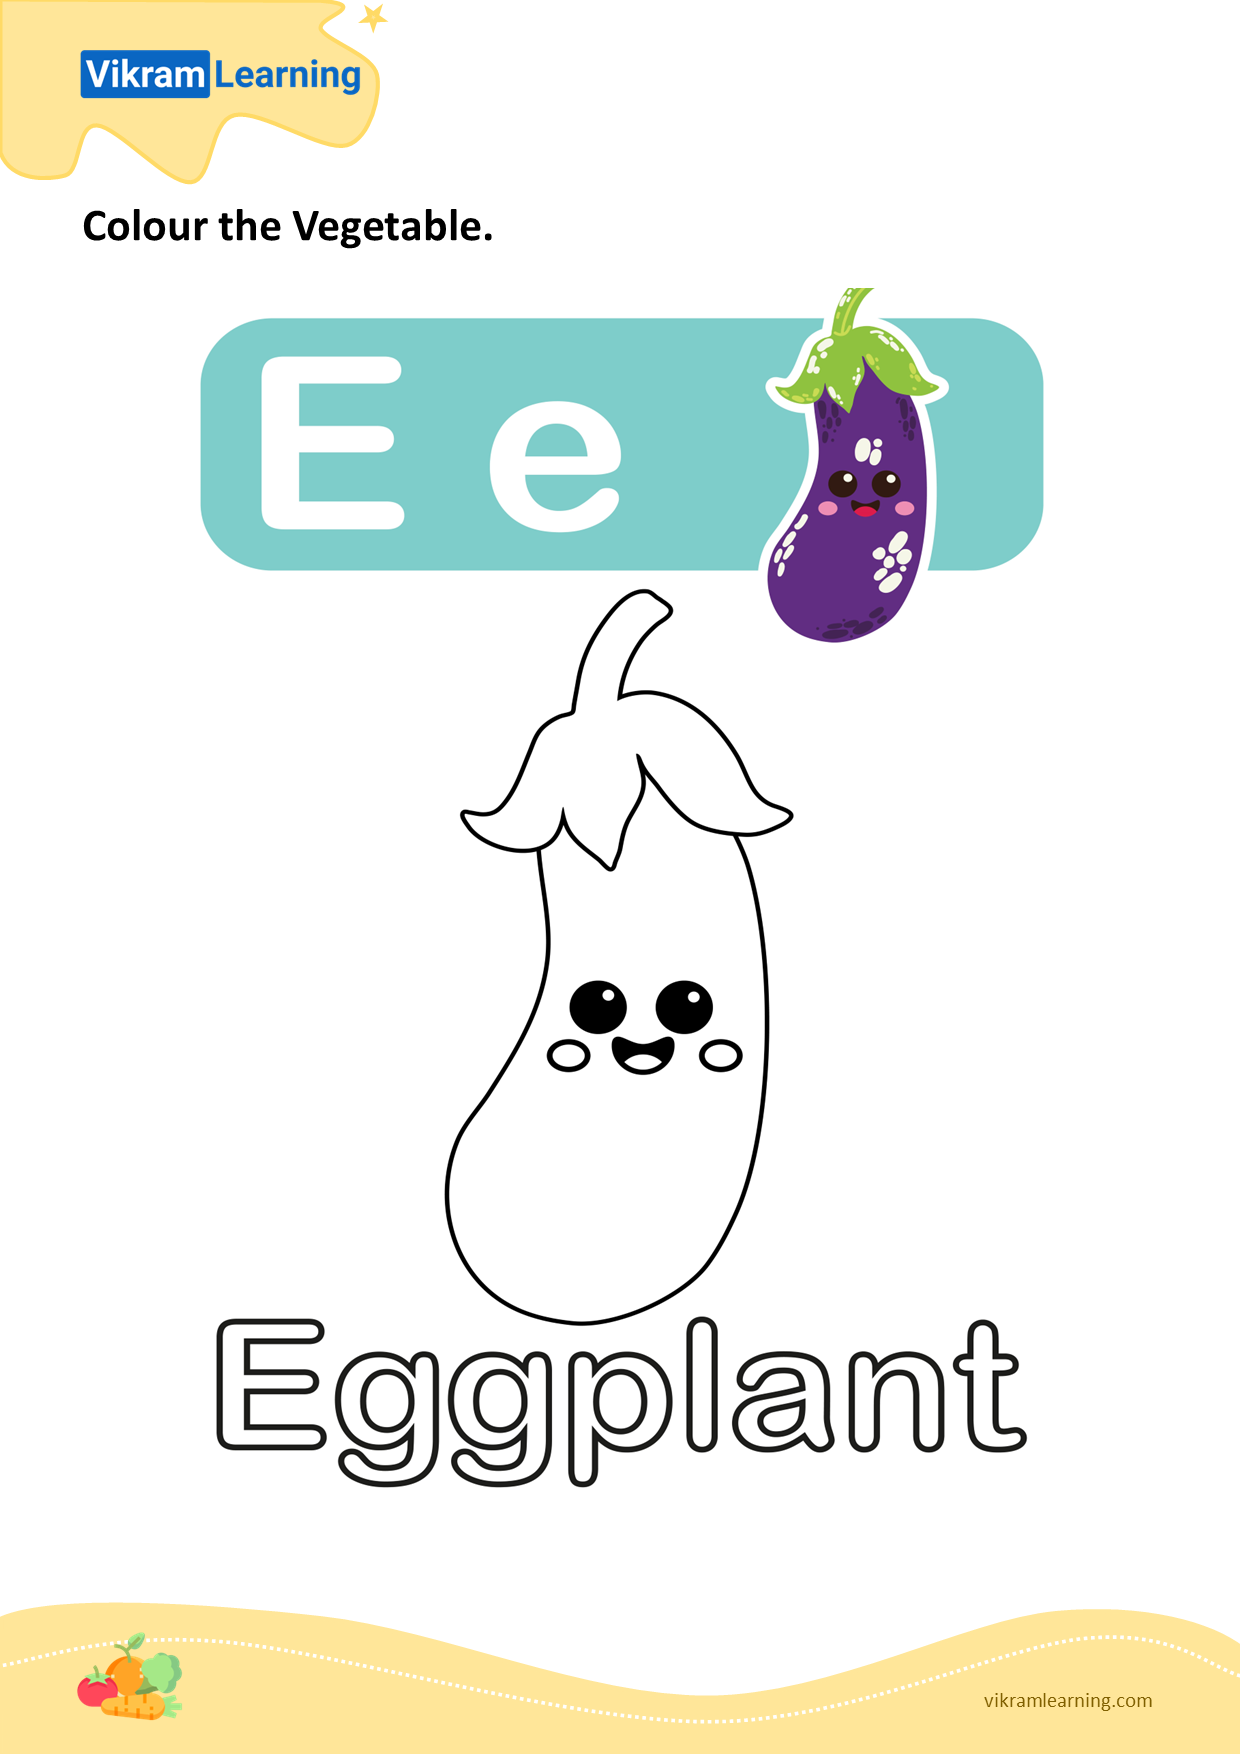 Download colour the vegetable - eggplant worksheets